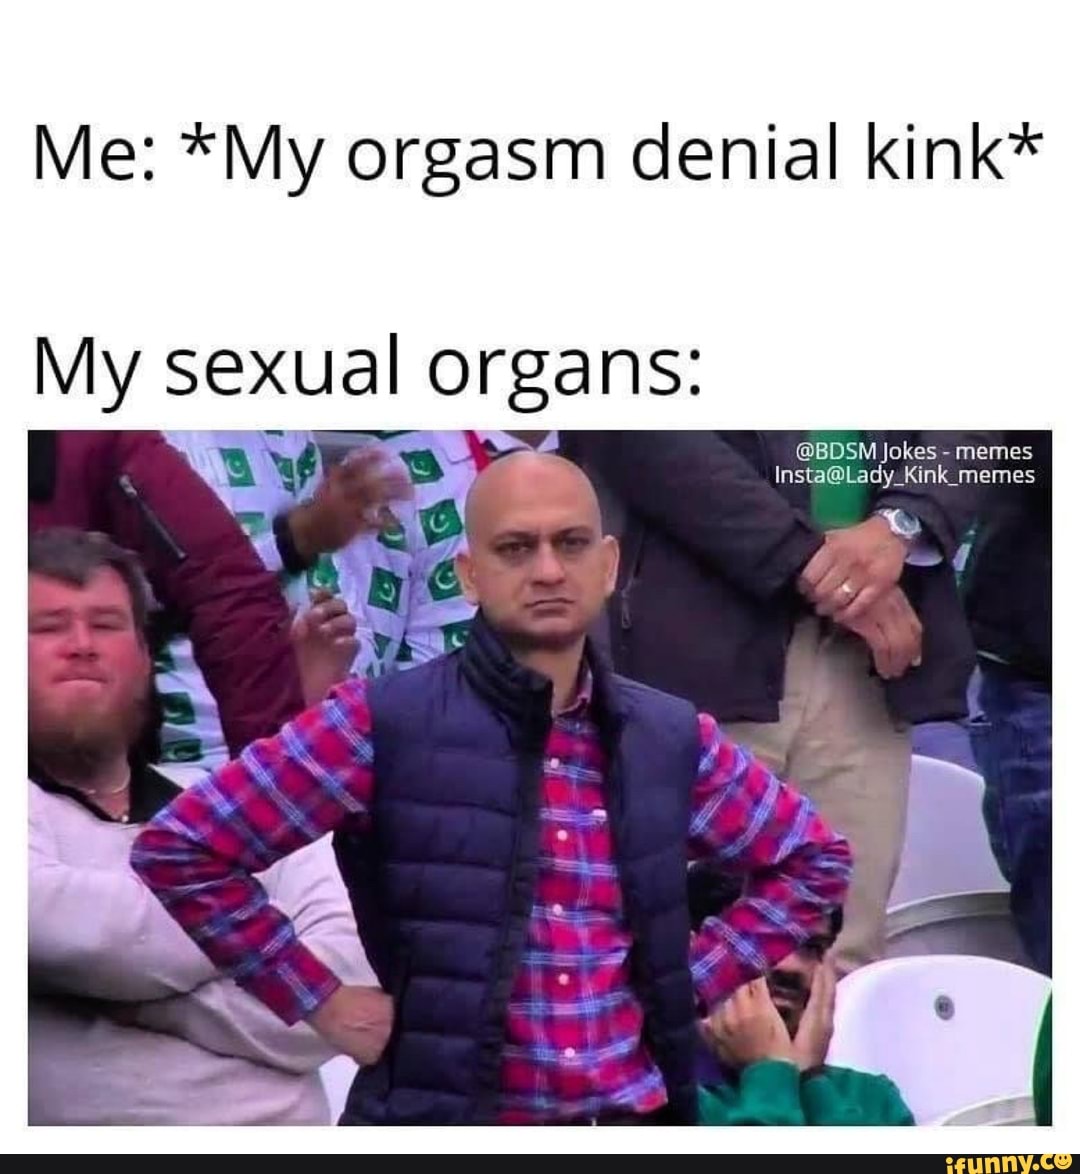 Orgsam Denial